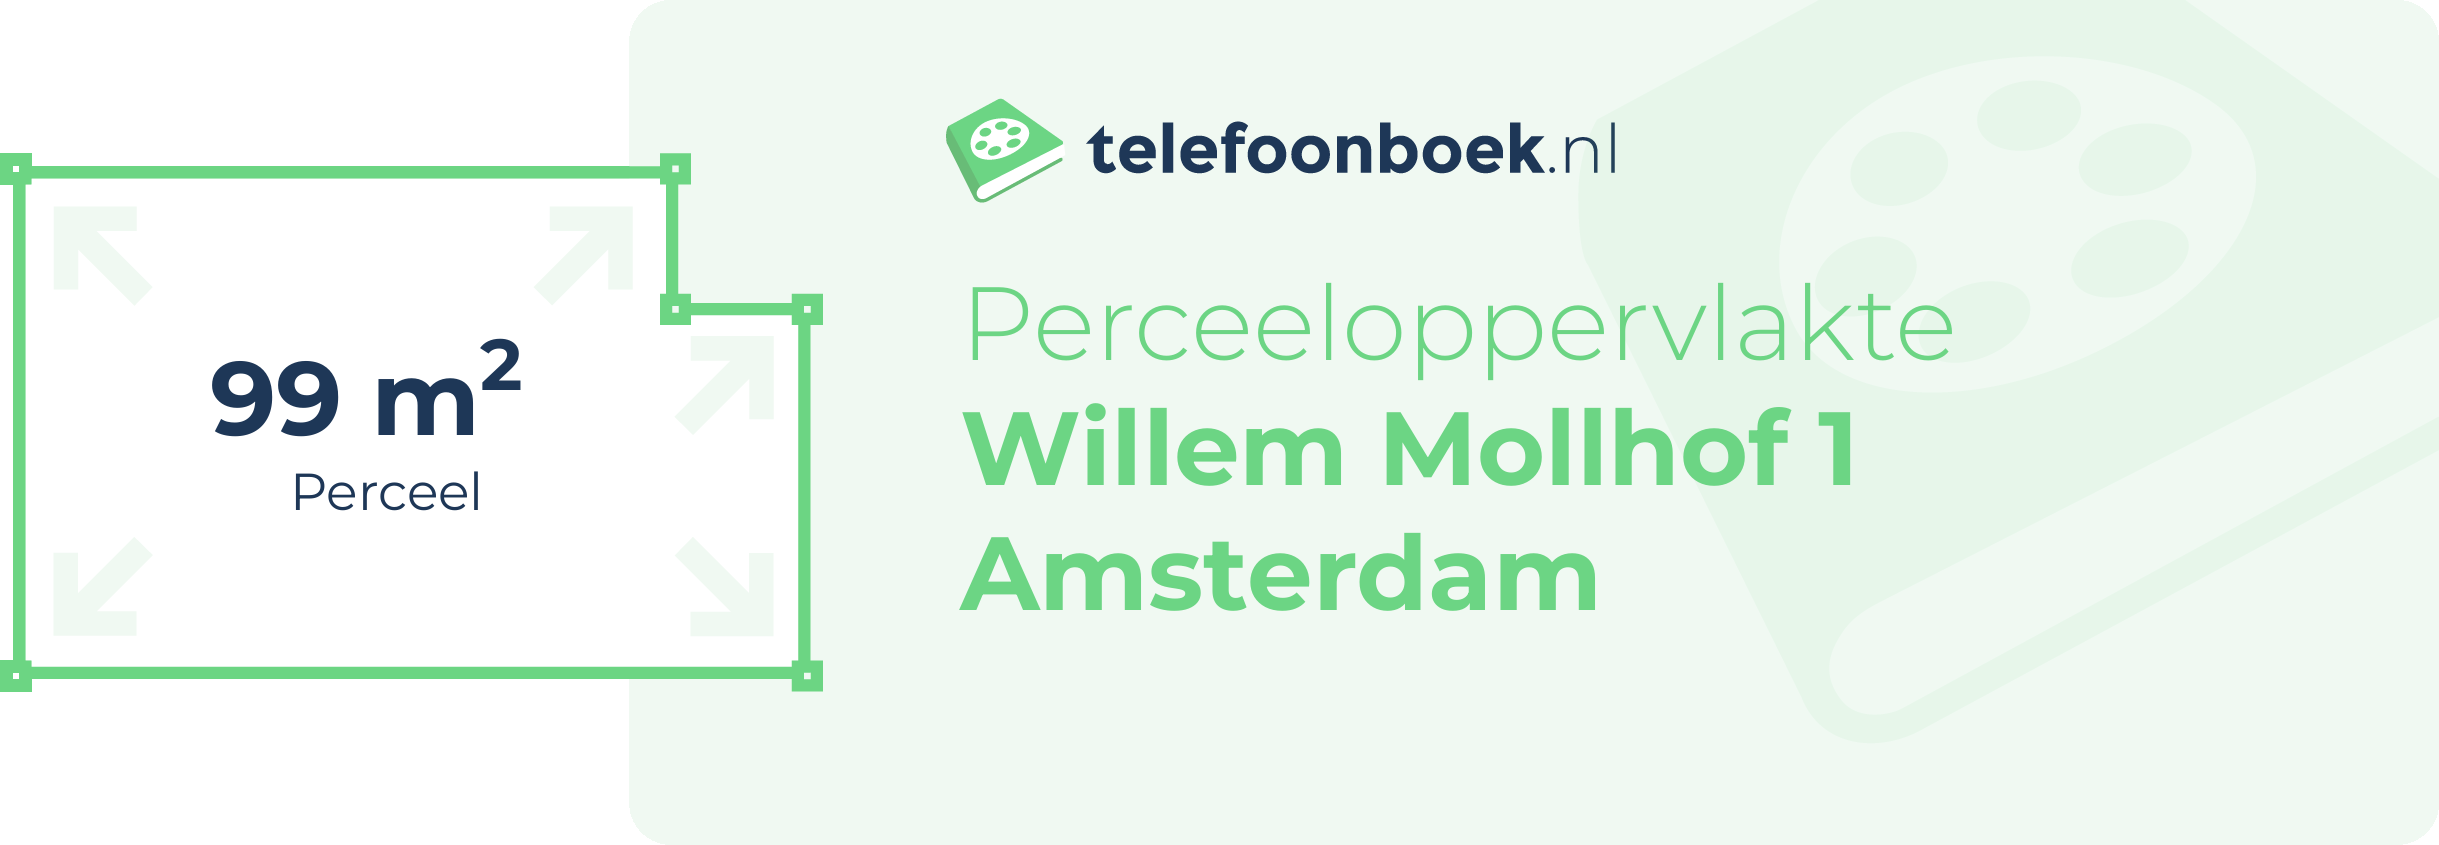 Perceeloppervlakte Willem Mollhof 1 Amsterdam